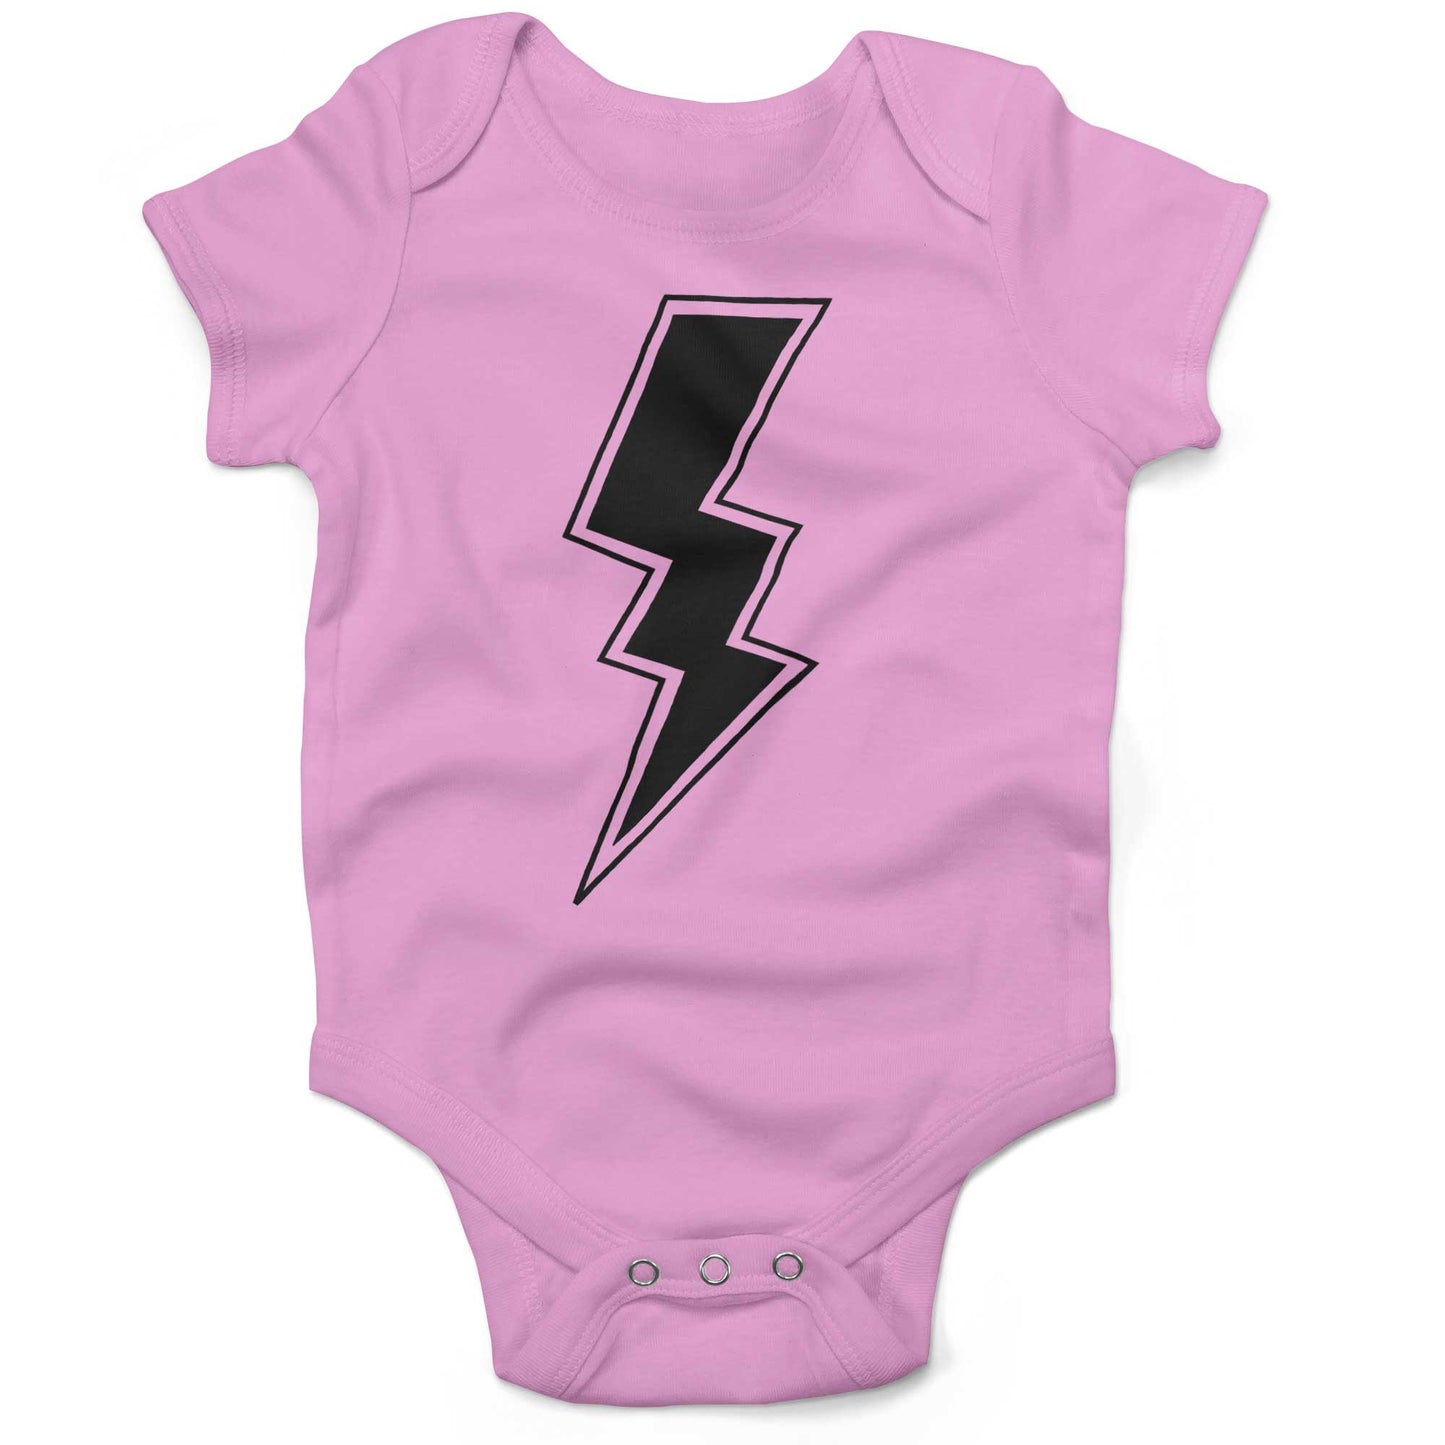 Giant Lightning Bolt Infant Bodysuit or Raglan Baby Tee-Organic Pink-3-6 months